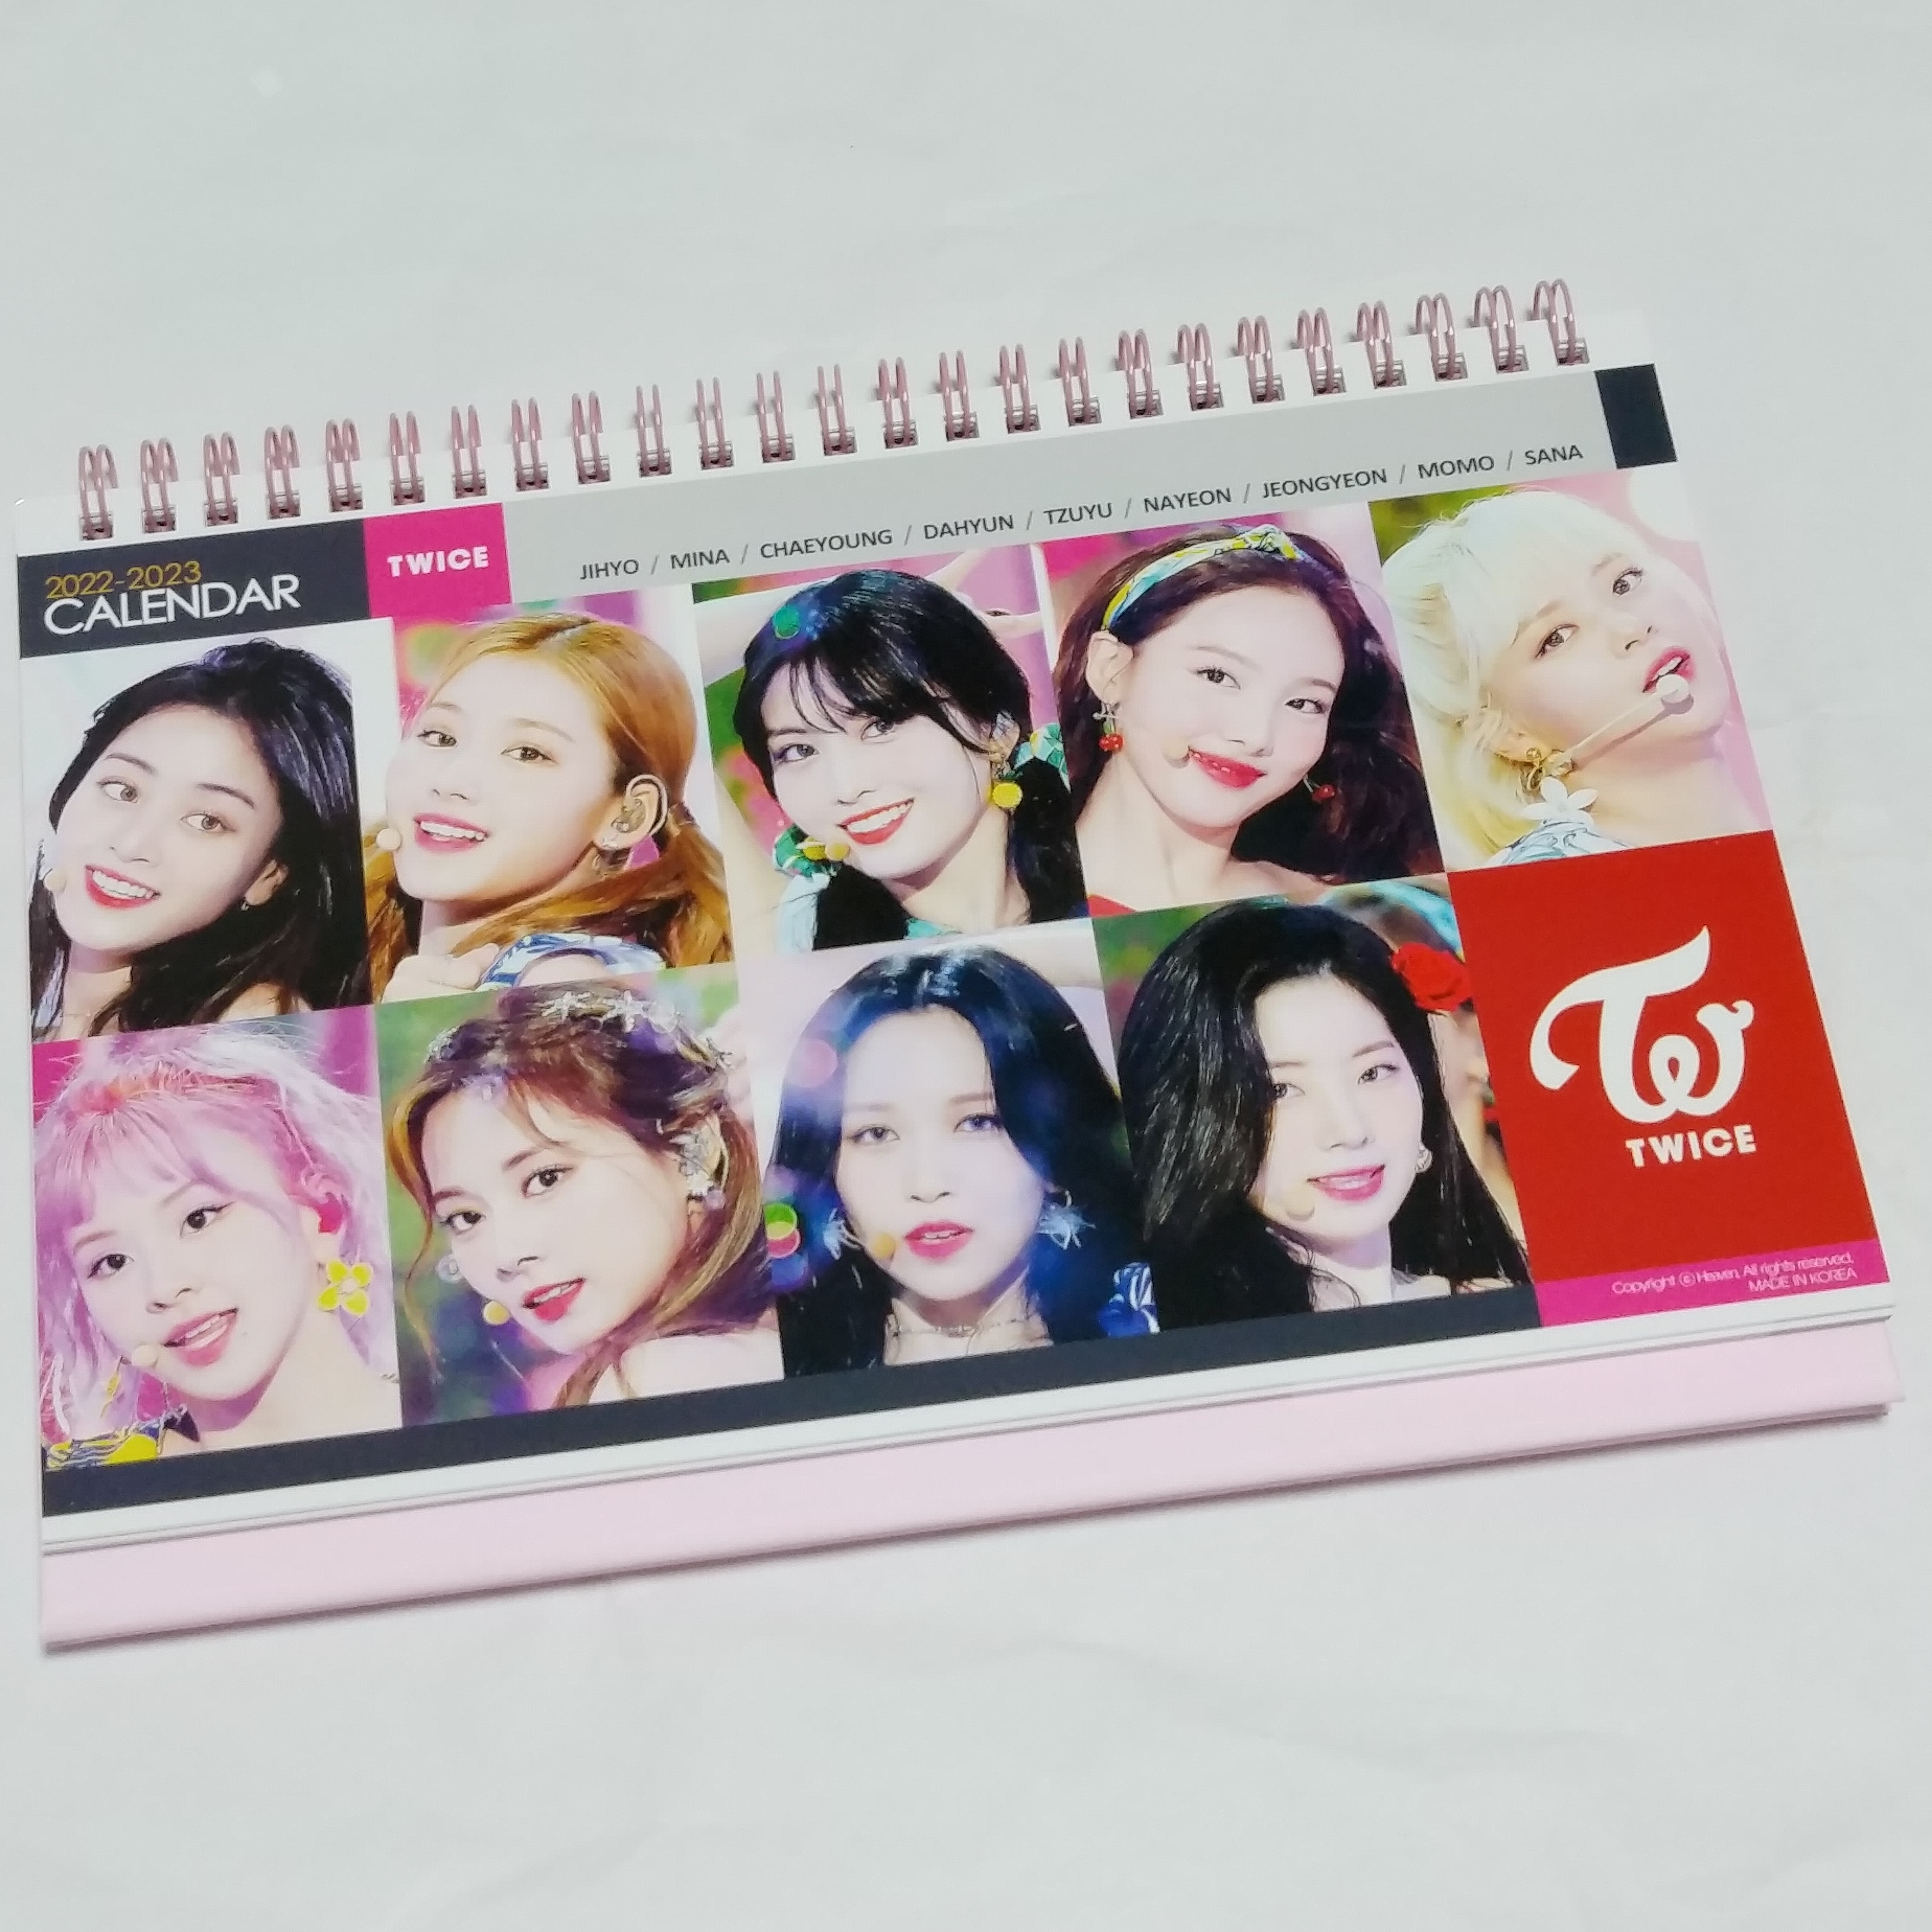 Twice 2022 Calendar Twice Pink Photo Desk Calendar 2022 2023 Calender Korean Pop Star Celebrity  Singer – Actskorea